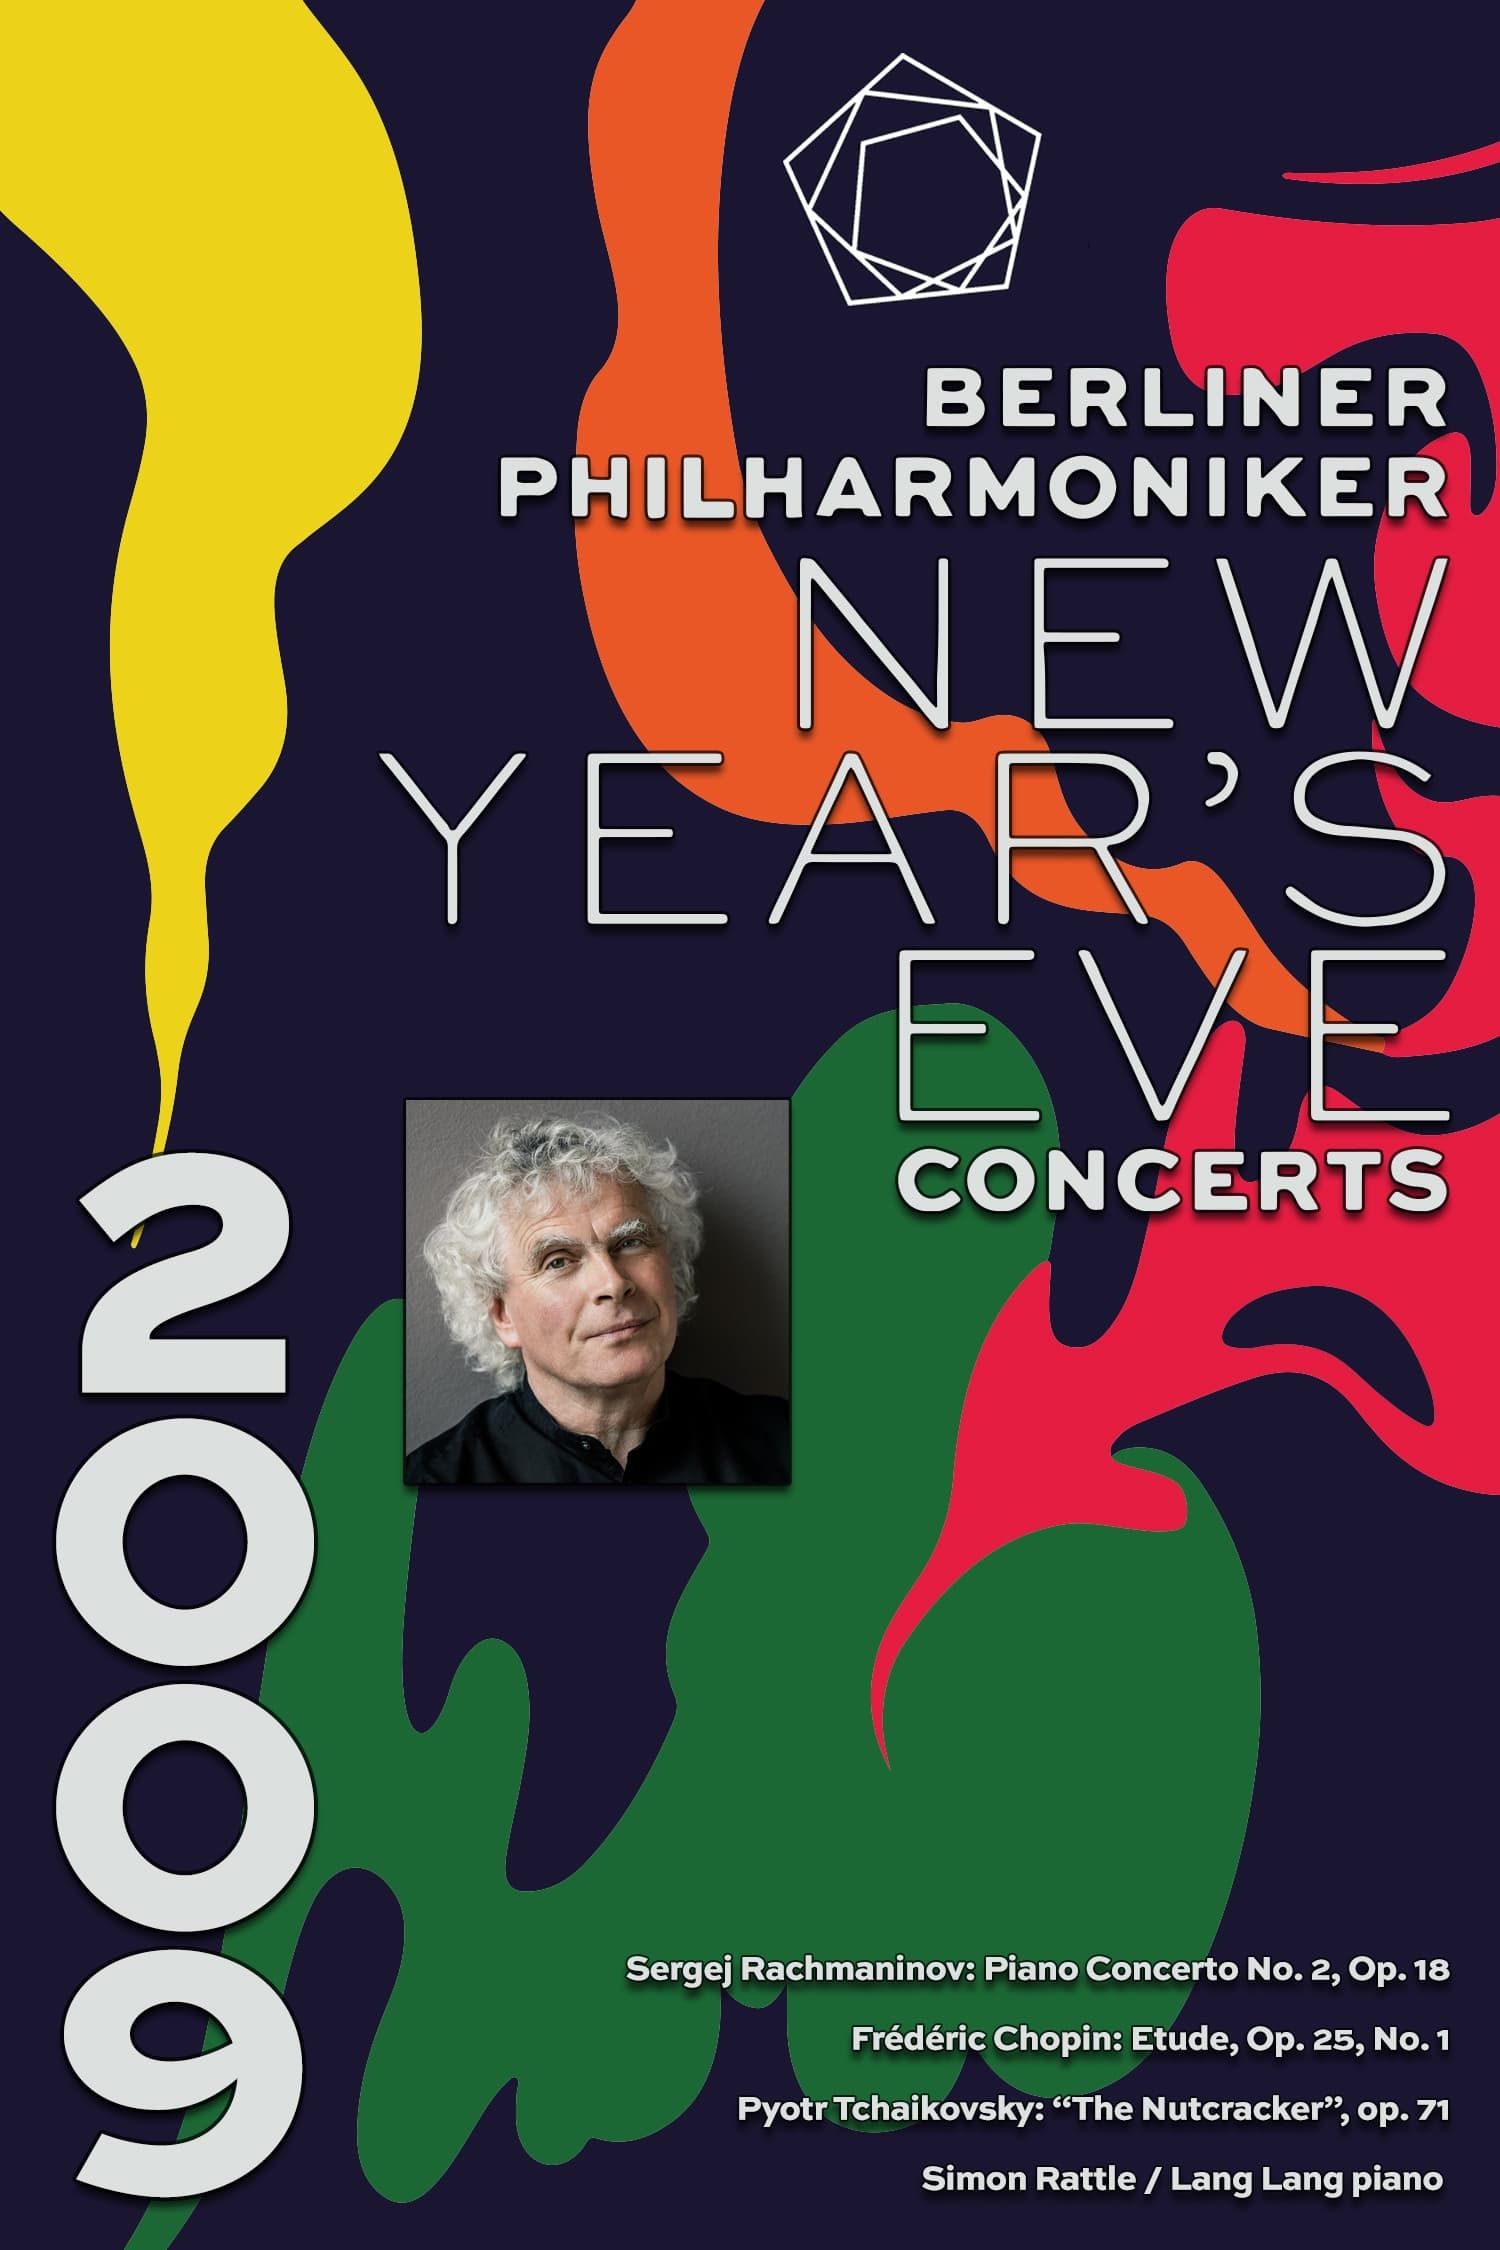 The Berliner Philharmoniker’s New Year’s Eve Concert: 2009